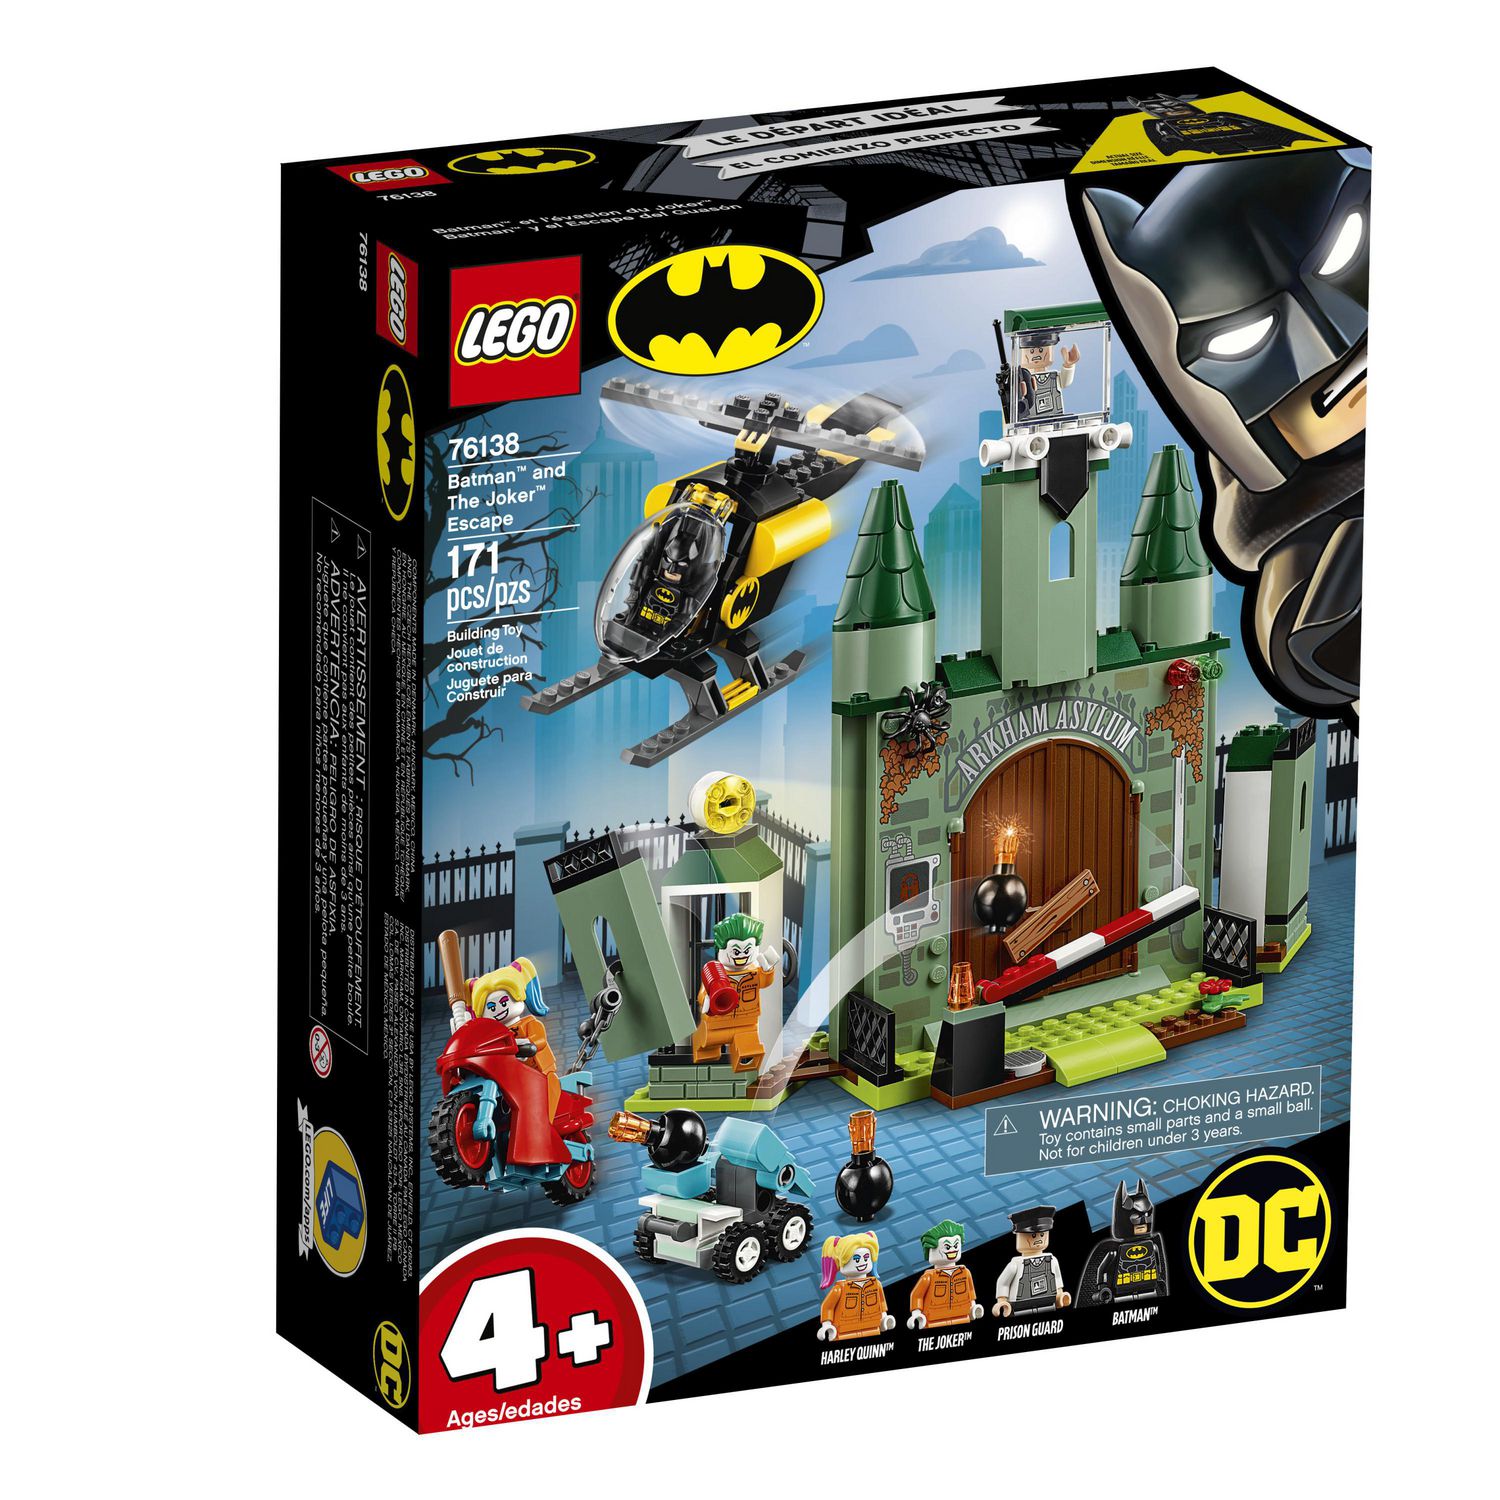 sh599 NEW LEGO  Harley Quinn Prison FROM SET 76138 SUPER HEROES BATMAN II